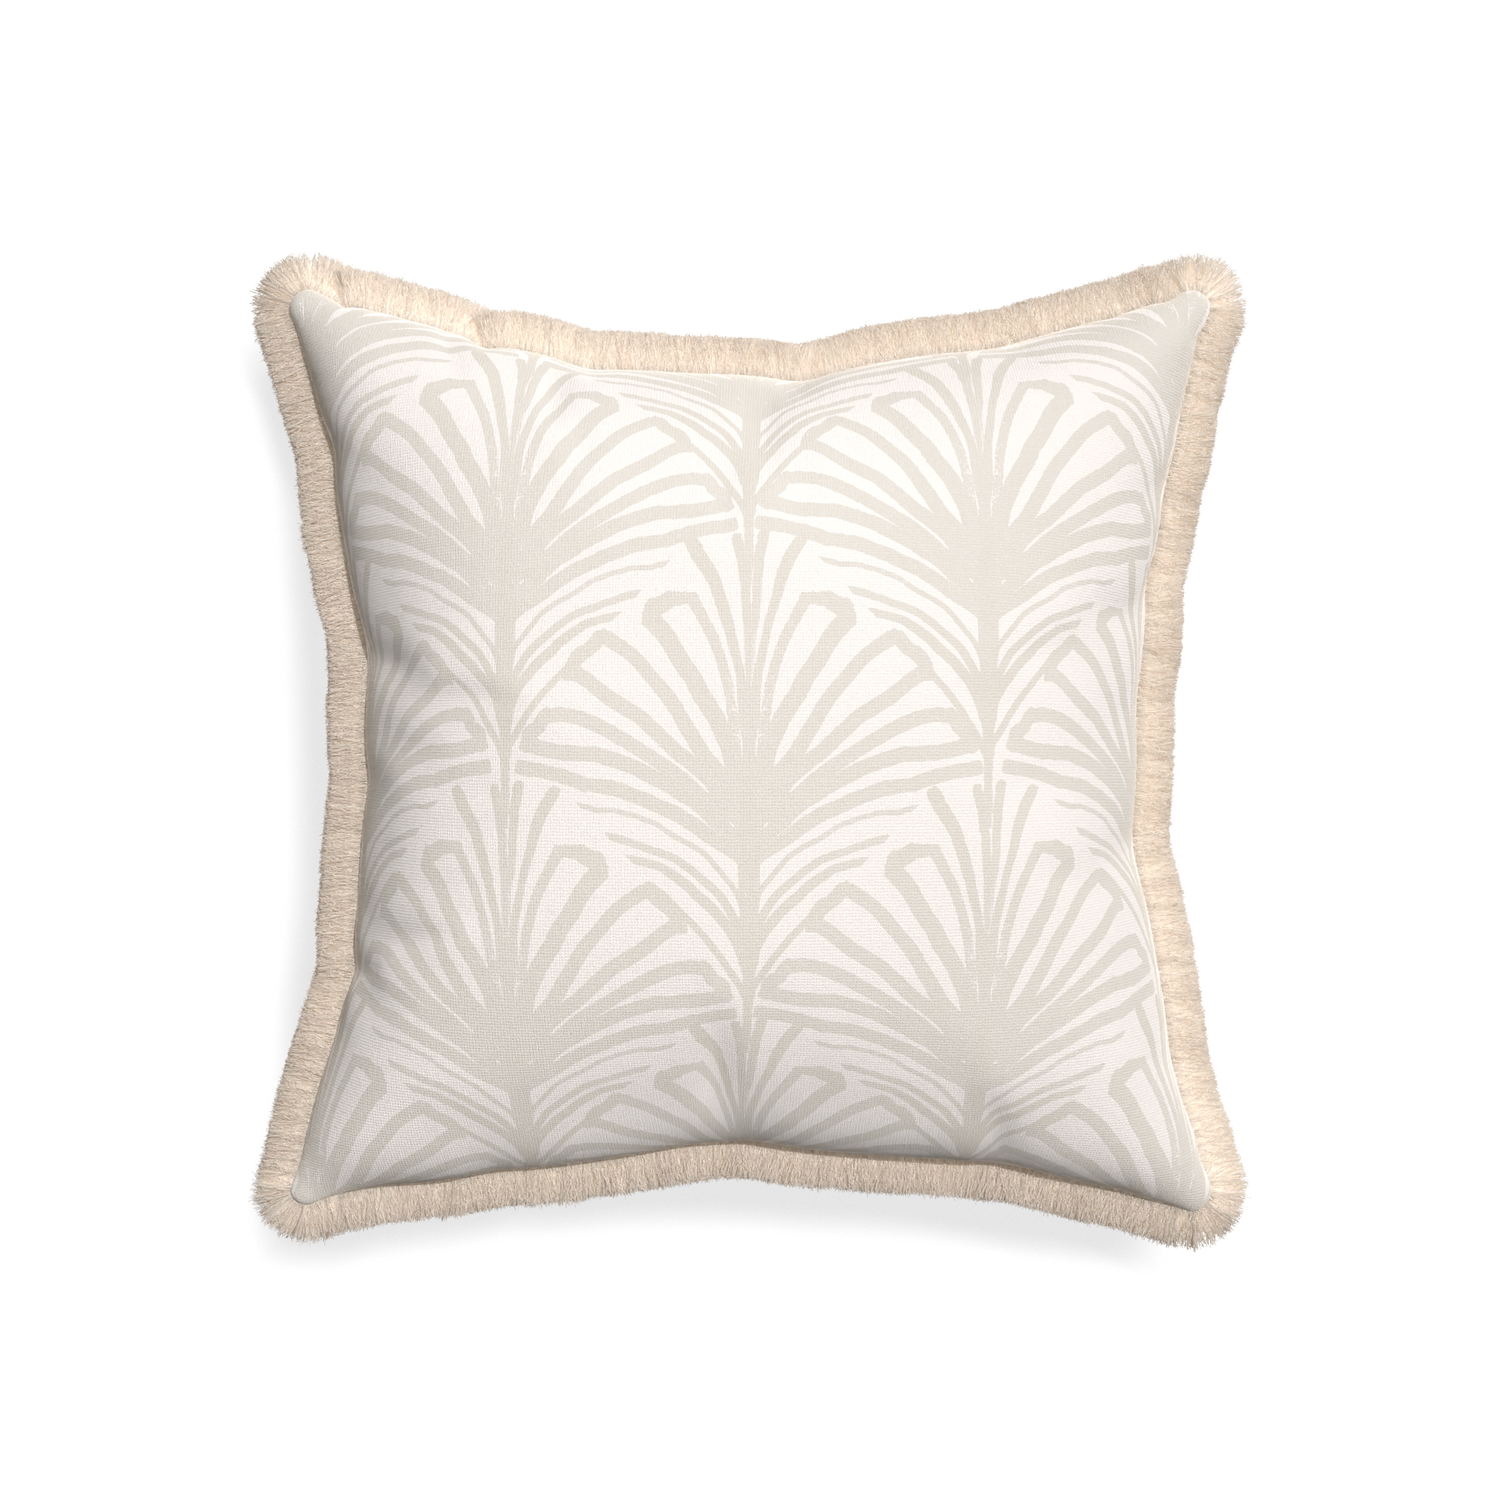 20-square suzy sand custom pillow with cream fringe on white background